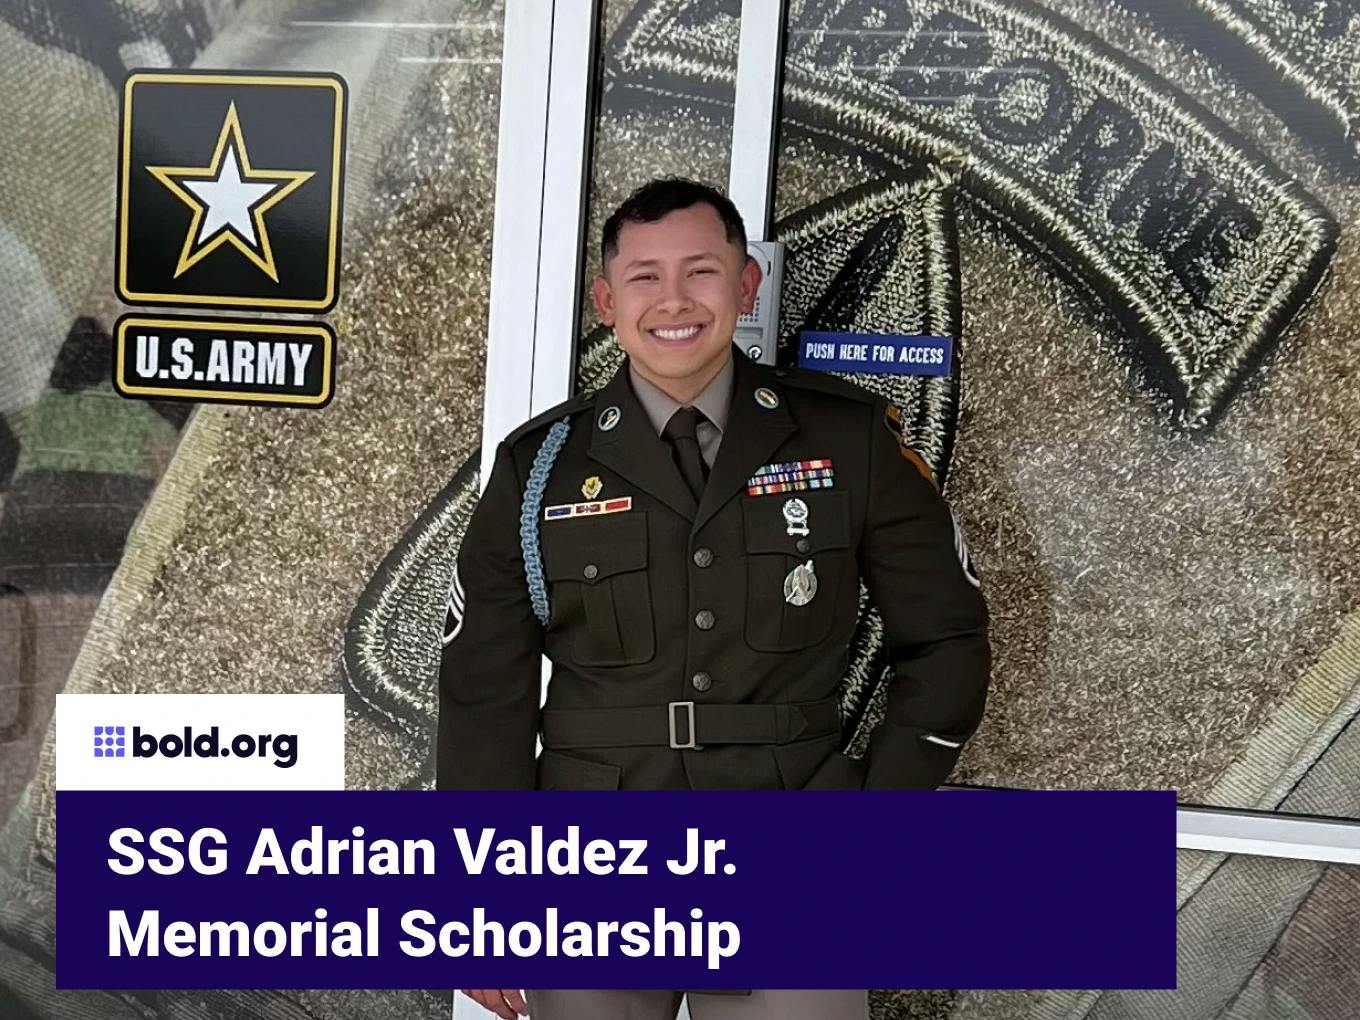 SSG Adrian Valdez Jr. Memorial Scholarship